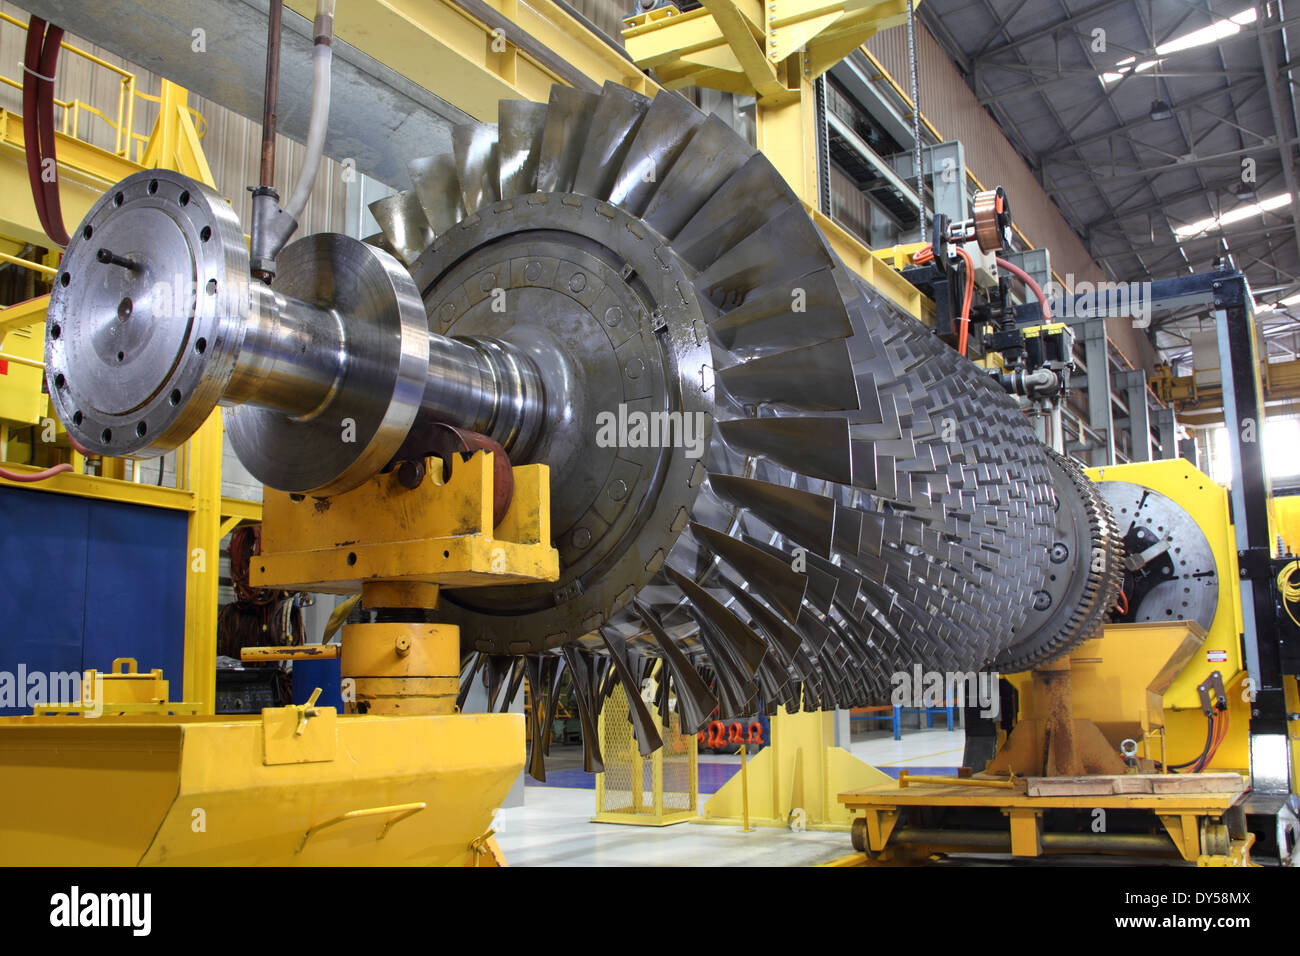 Turbine rotor at workshop Stock Photo